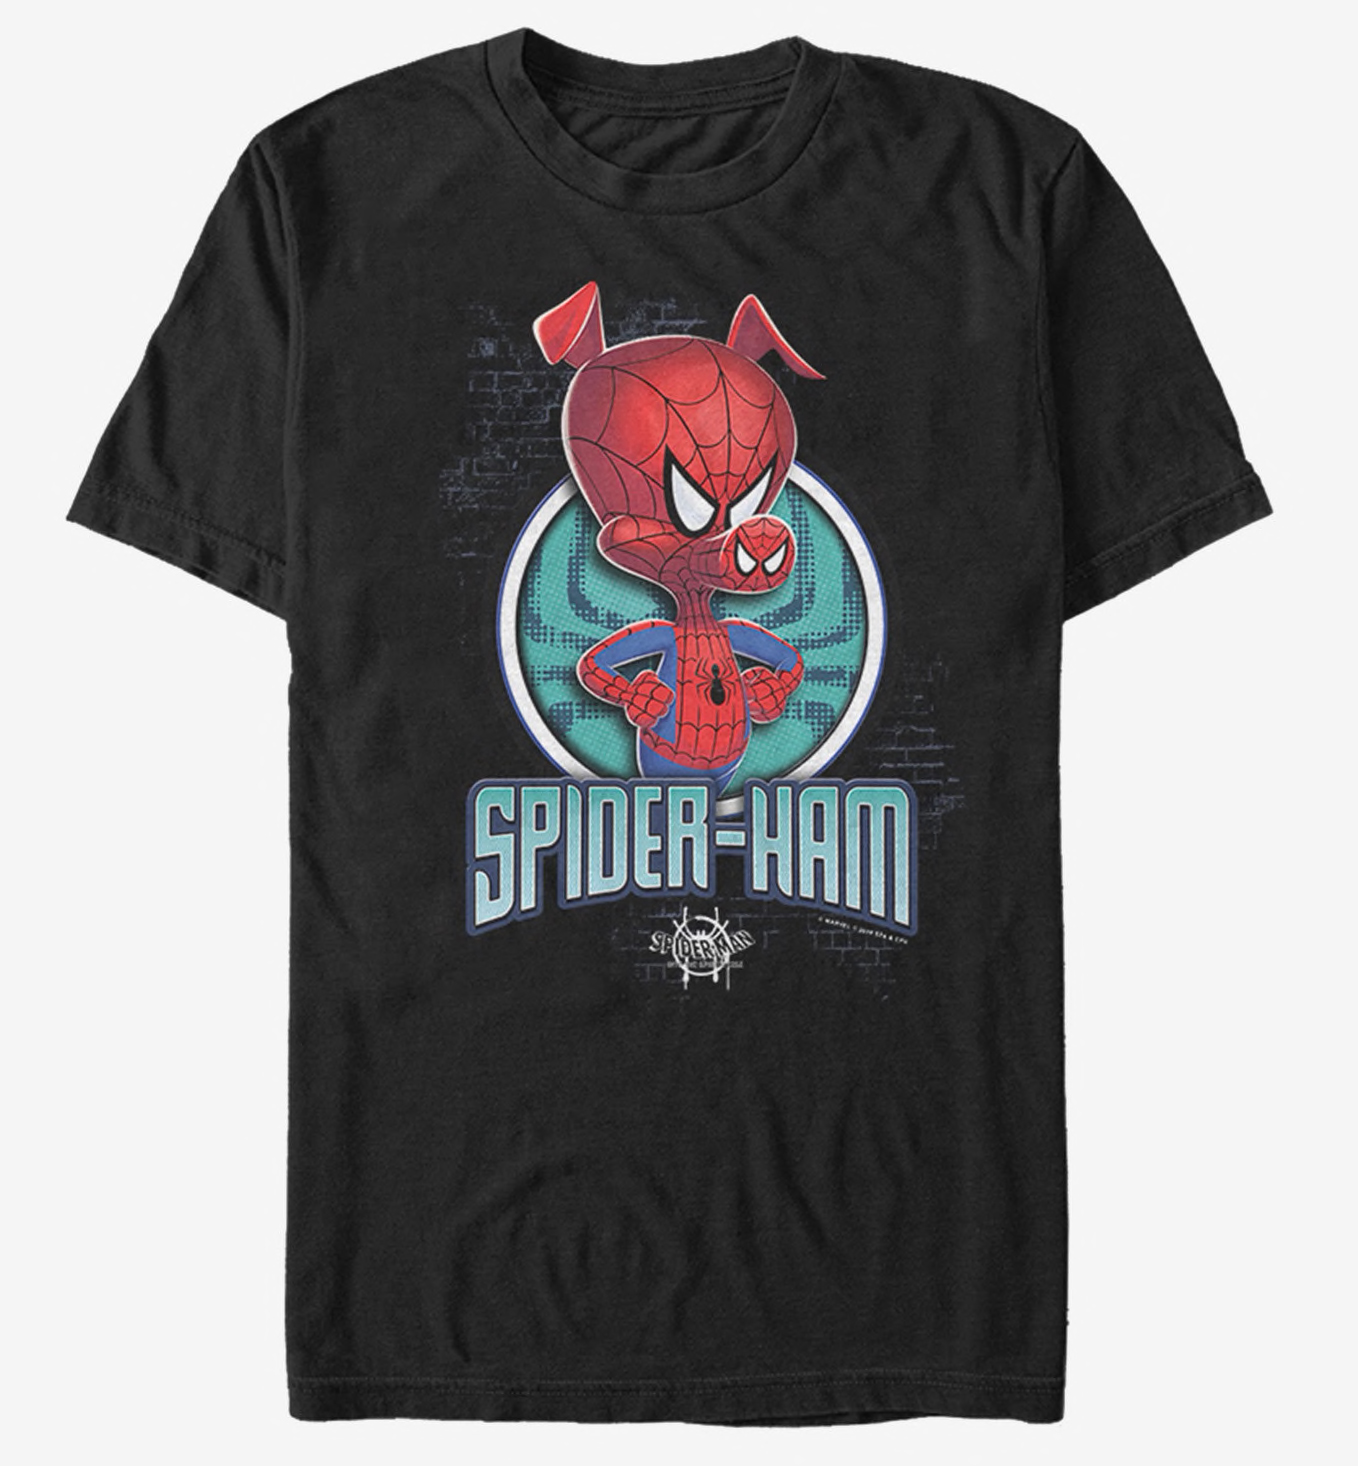 spiderman-spider-verse-shirt-match-jordan-1-origin-story-17